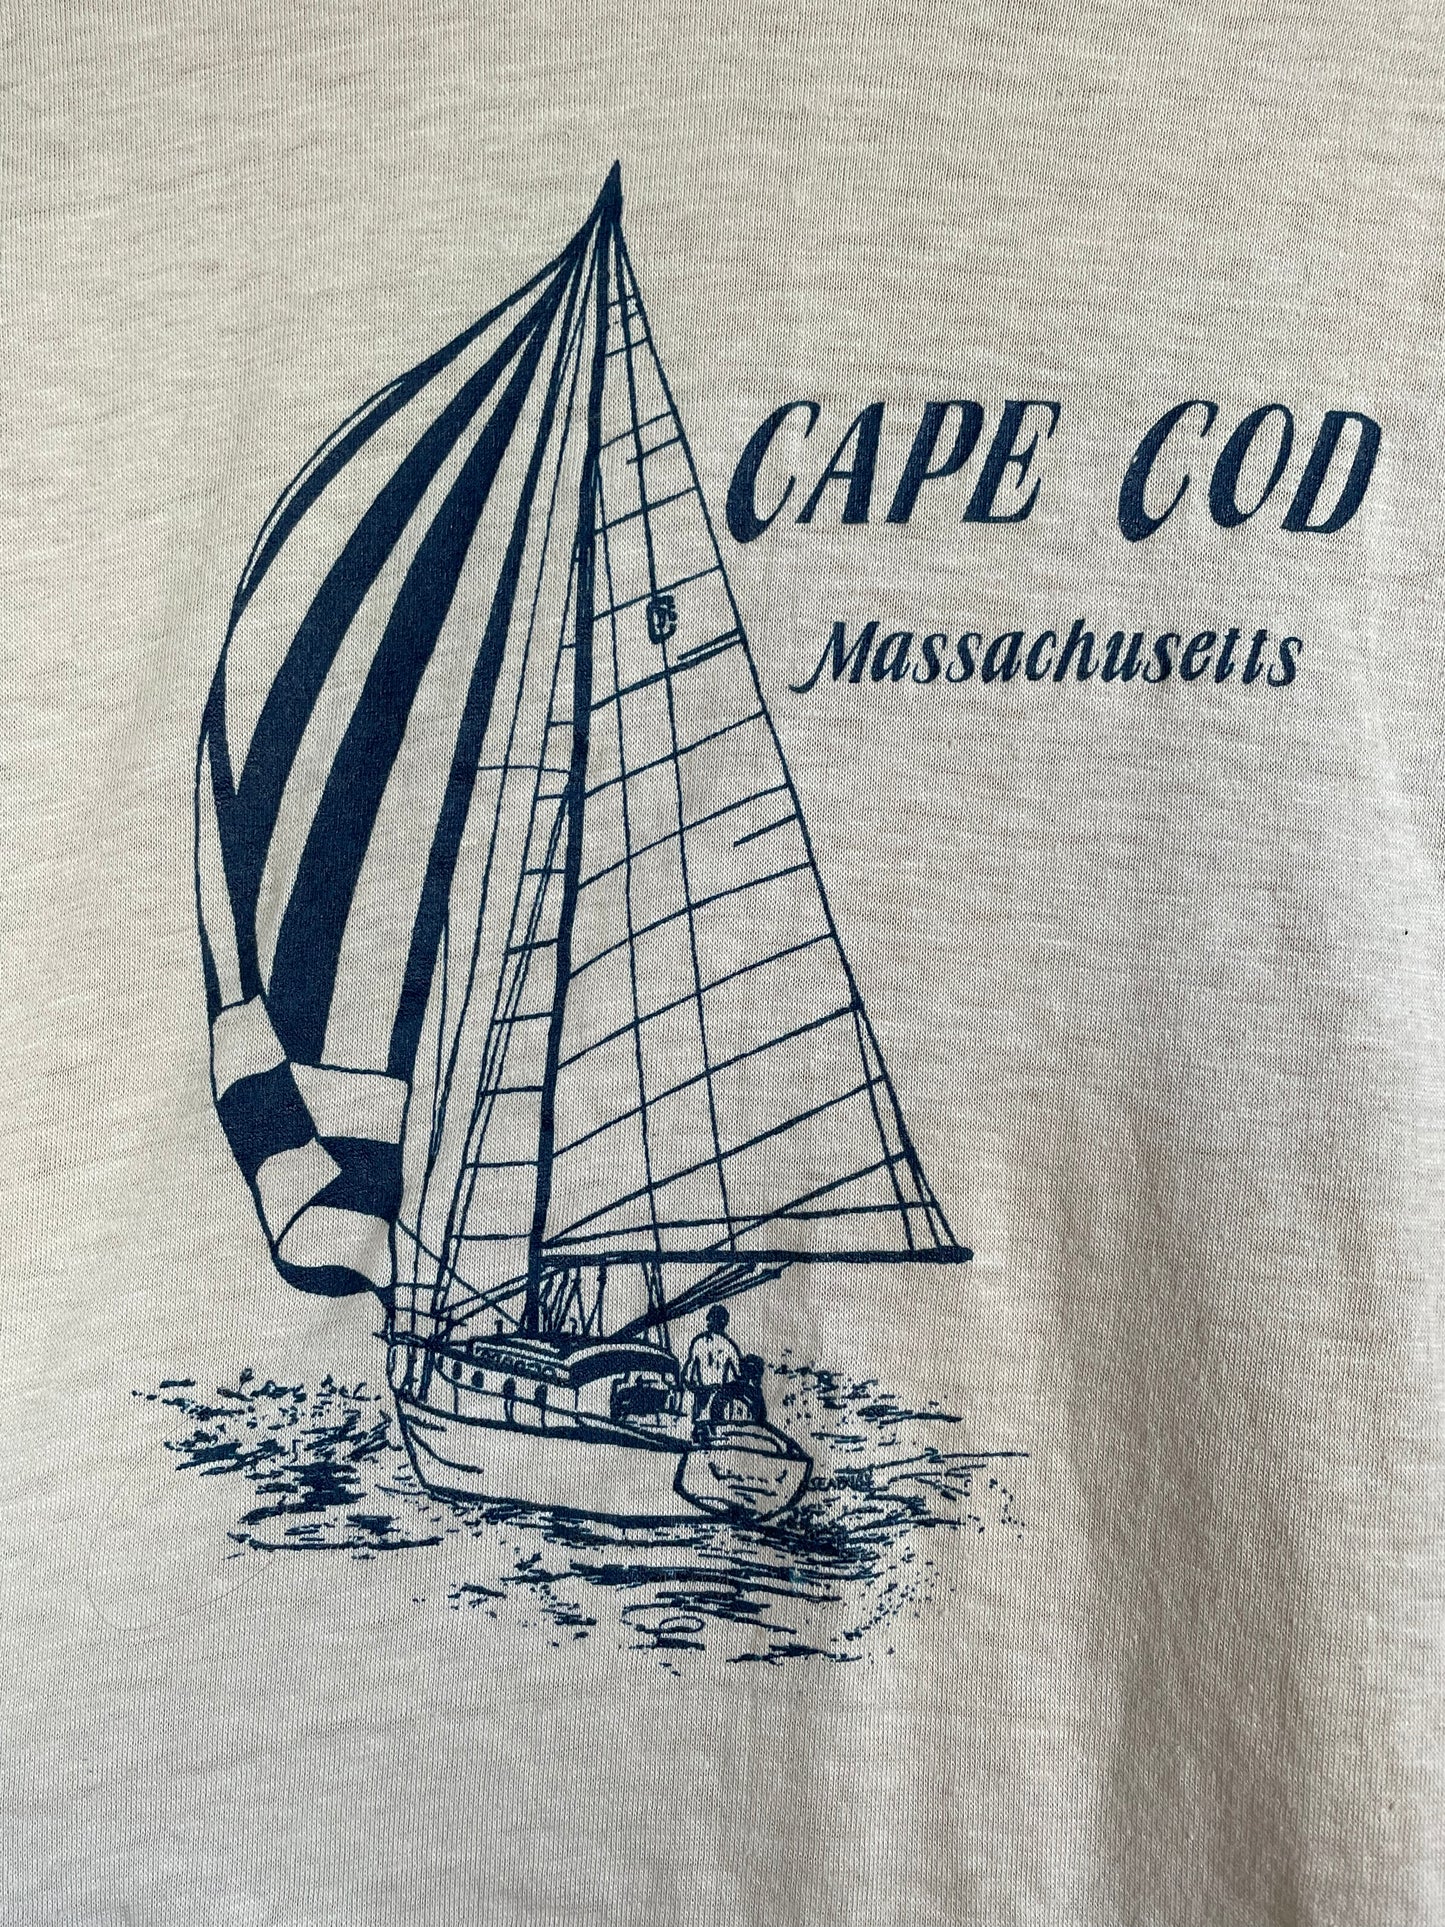 80s Cap Cod Massachusetts Tee